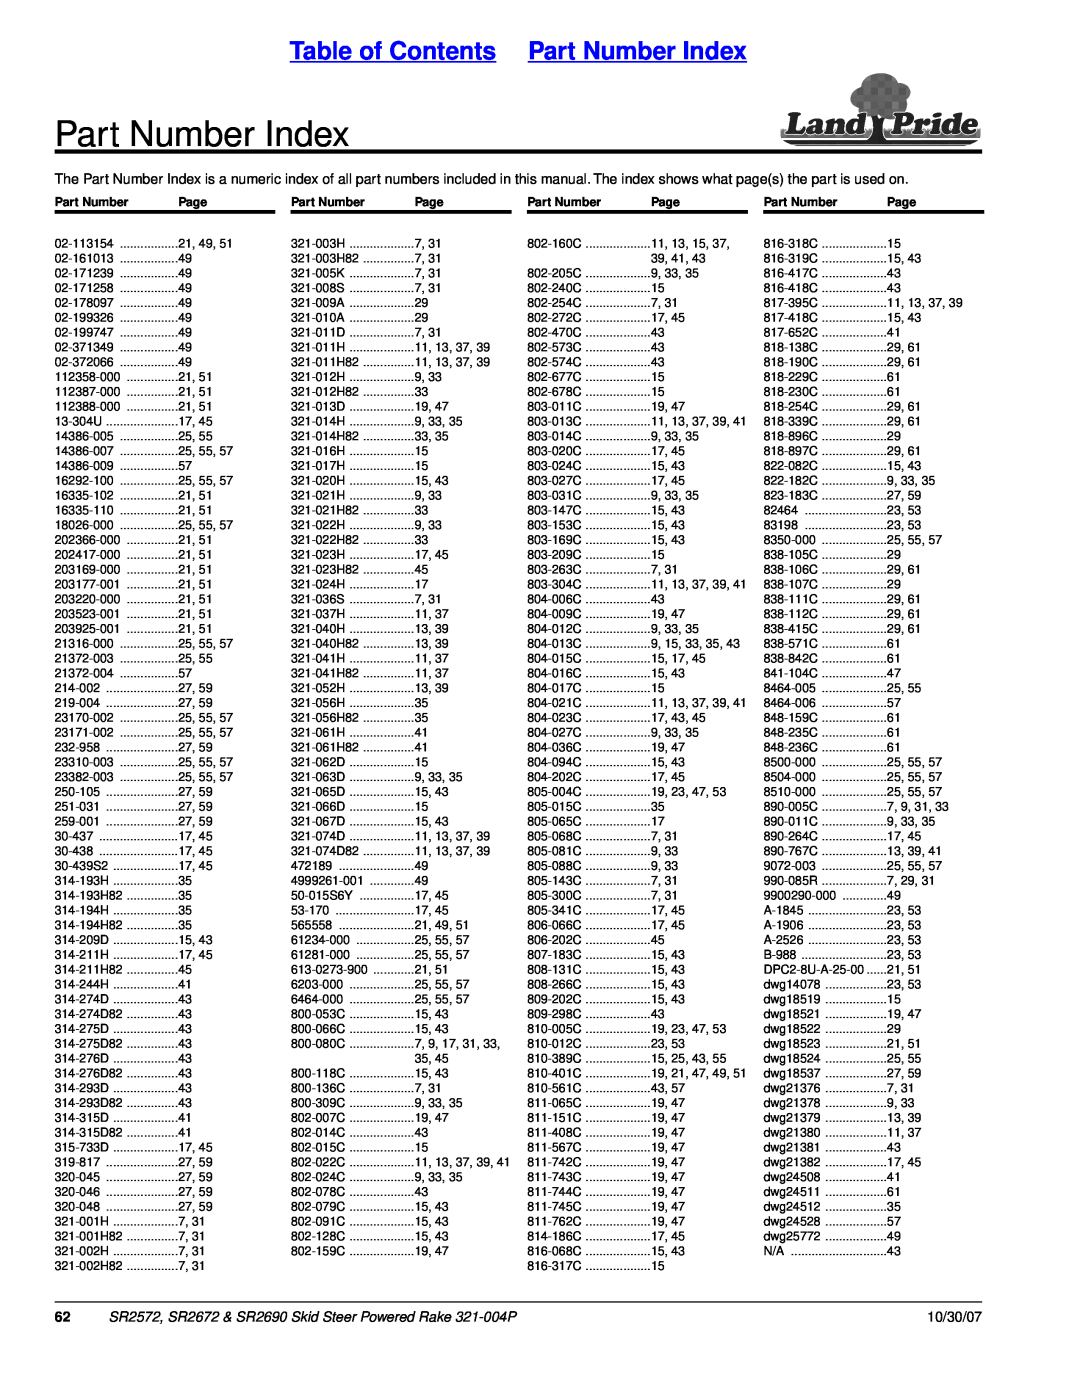 Land Pride SR2572, SR2690, SR2672 manual Table of Contents Part Number Index, 10/30/07, Page 